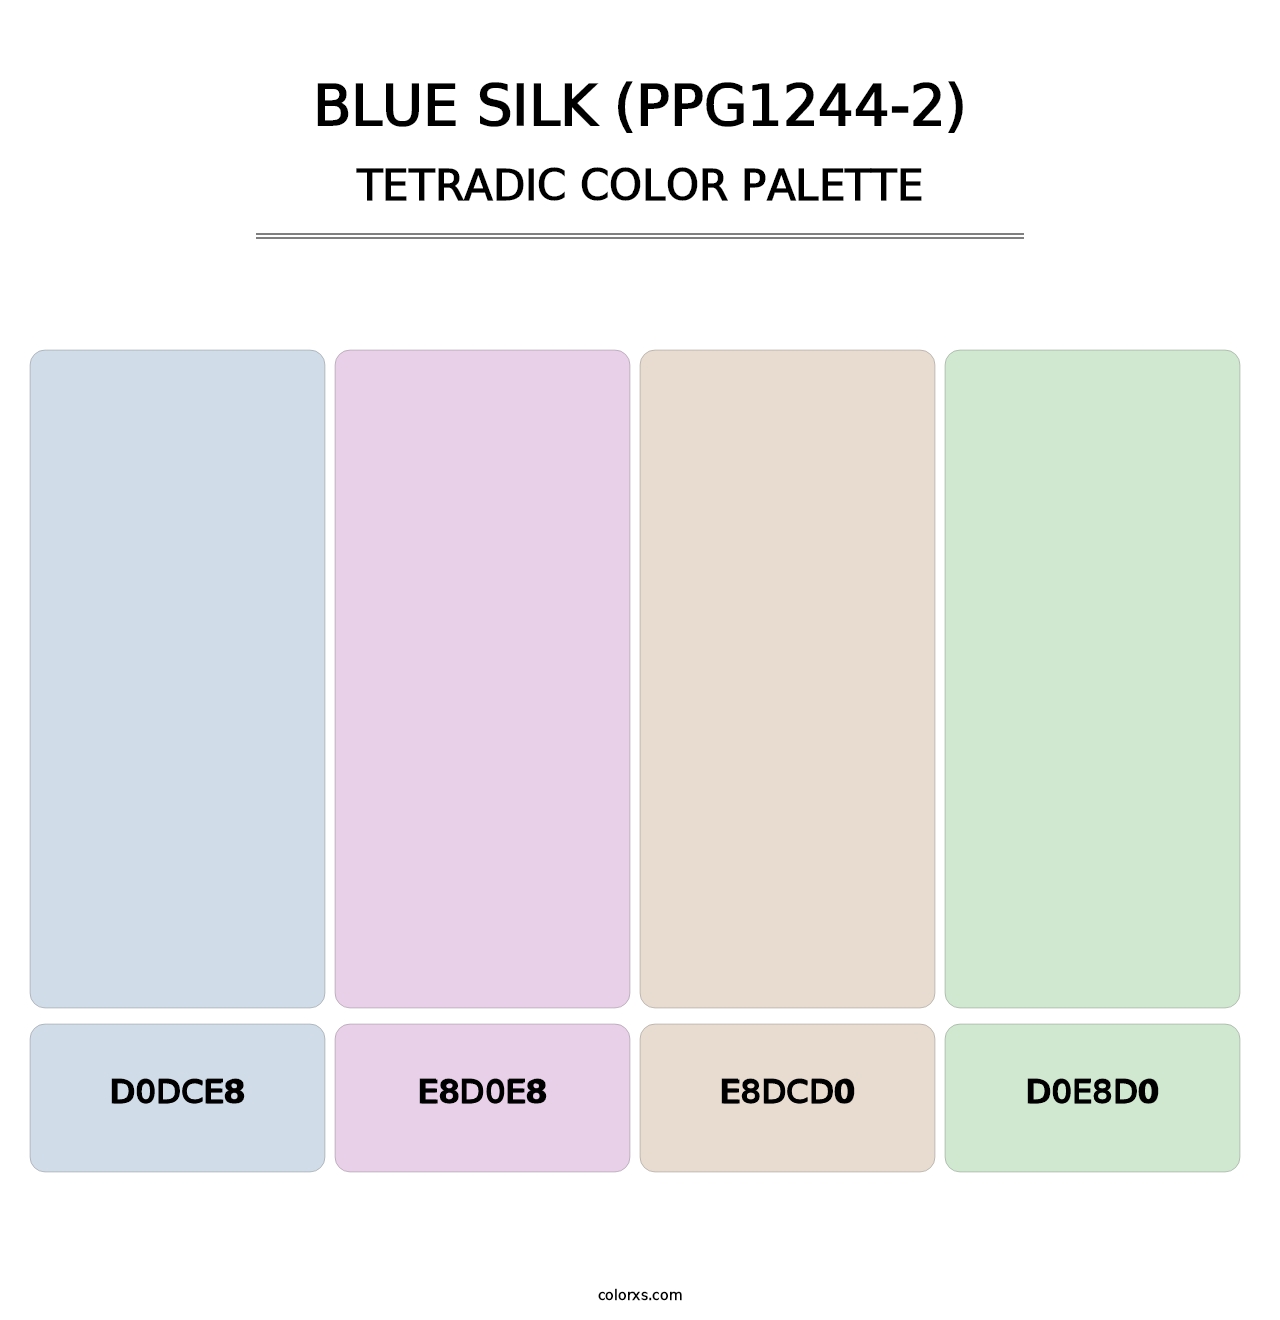 Blue Silk (PPG1244-2) - Tetradic Color Palette